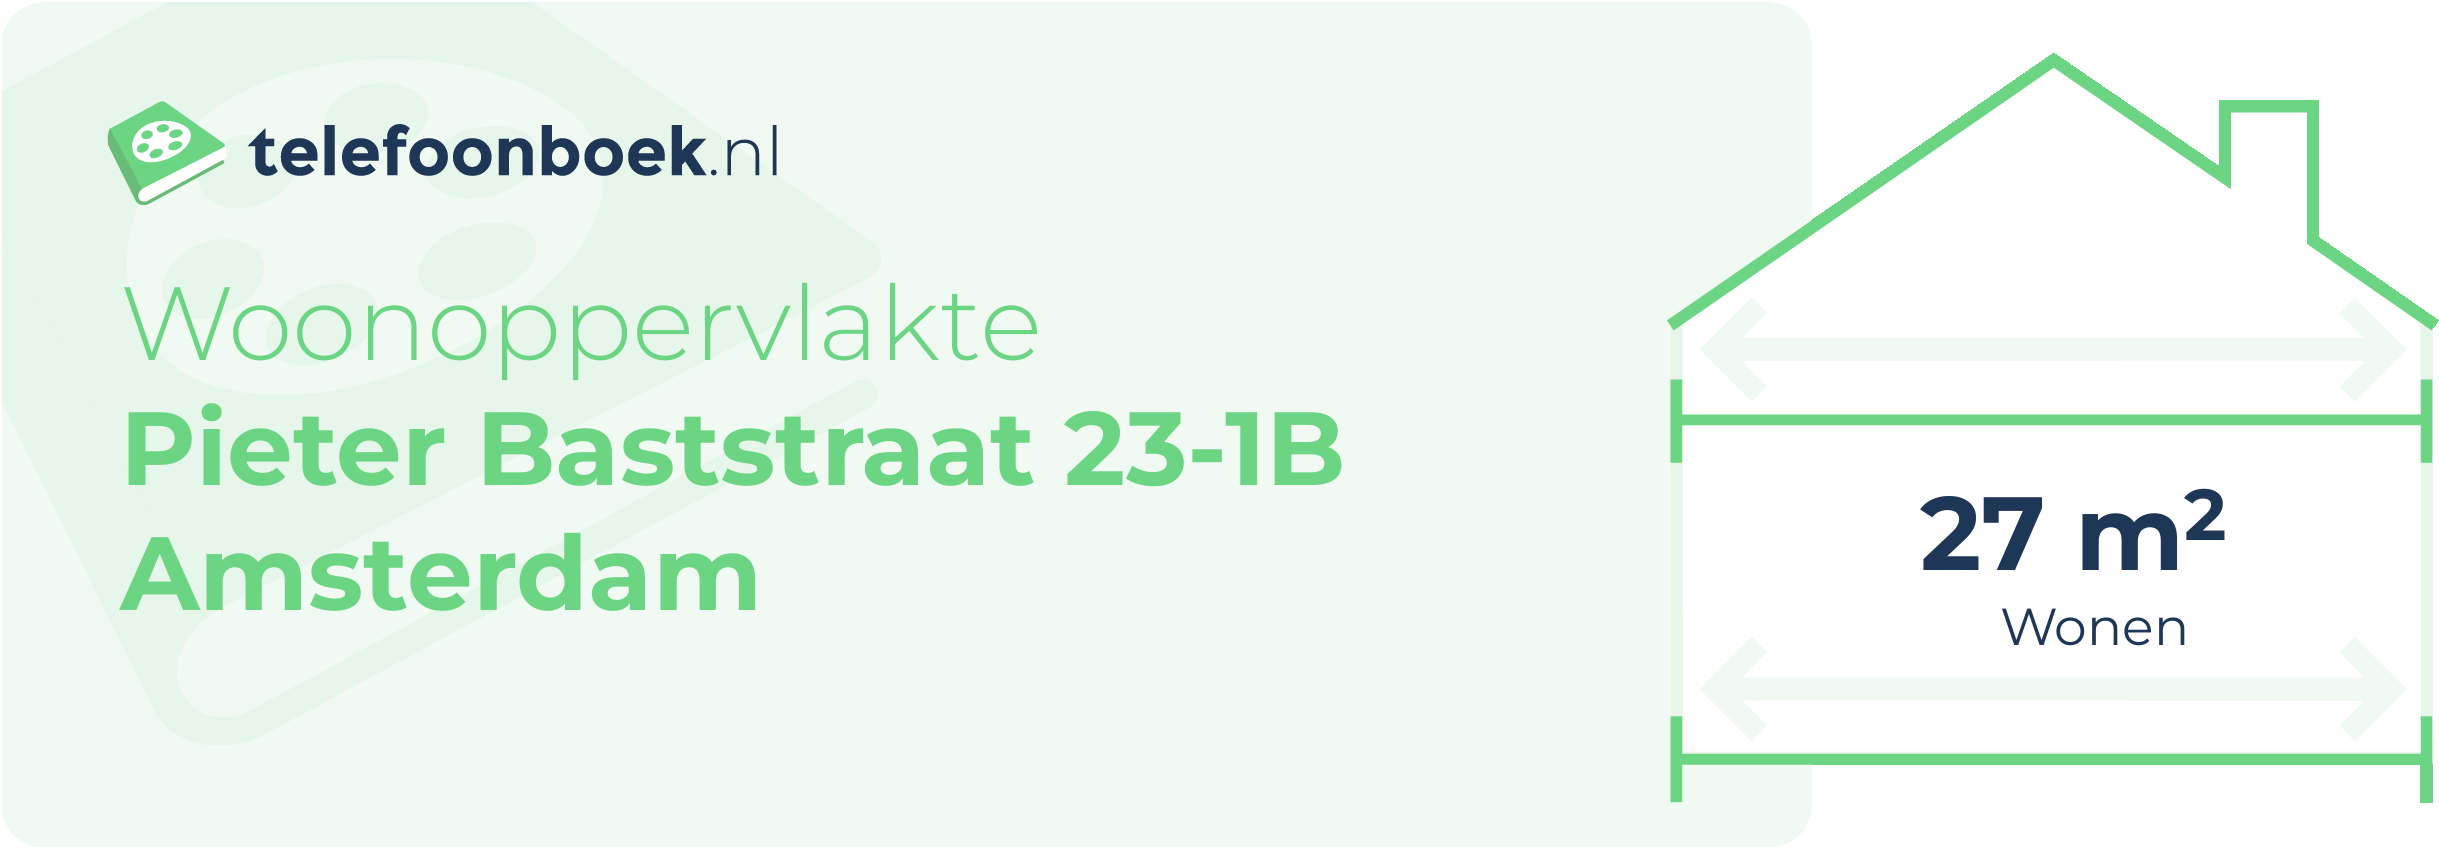 Woonoppervlakte Pieter Baststraat 23-1B Amsterdam